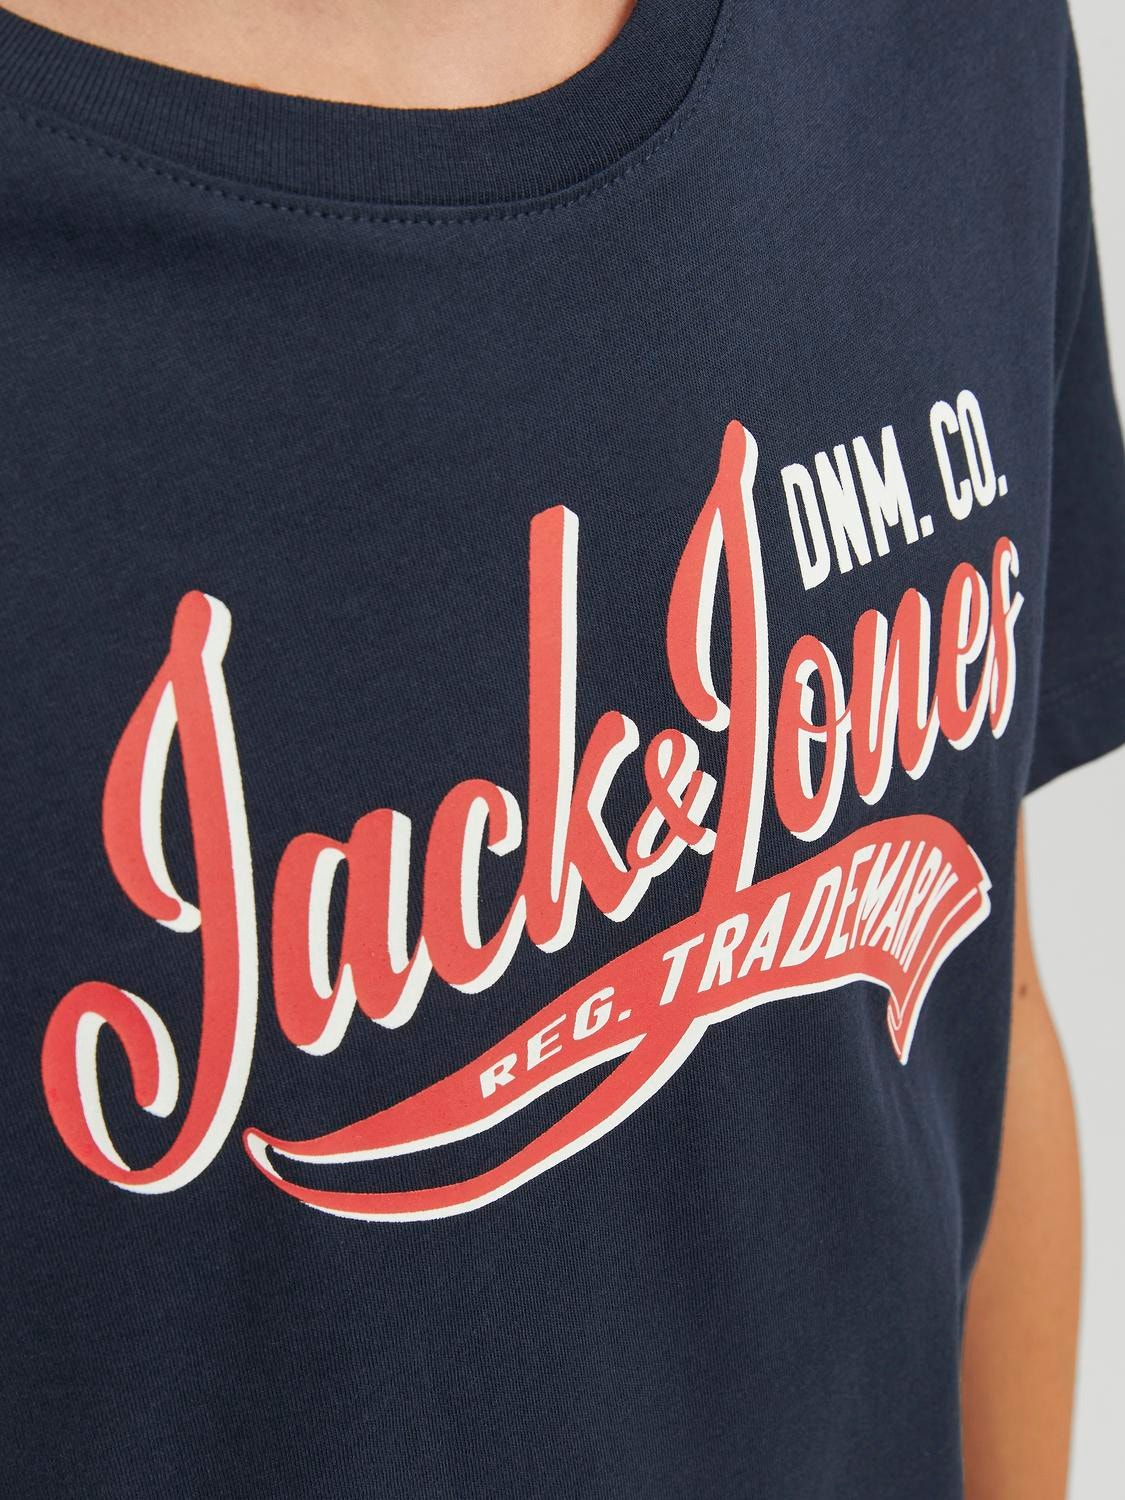 Jack & Jones Printed T-shirt For boys -Navy Blazer - 12237367